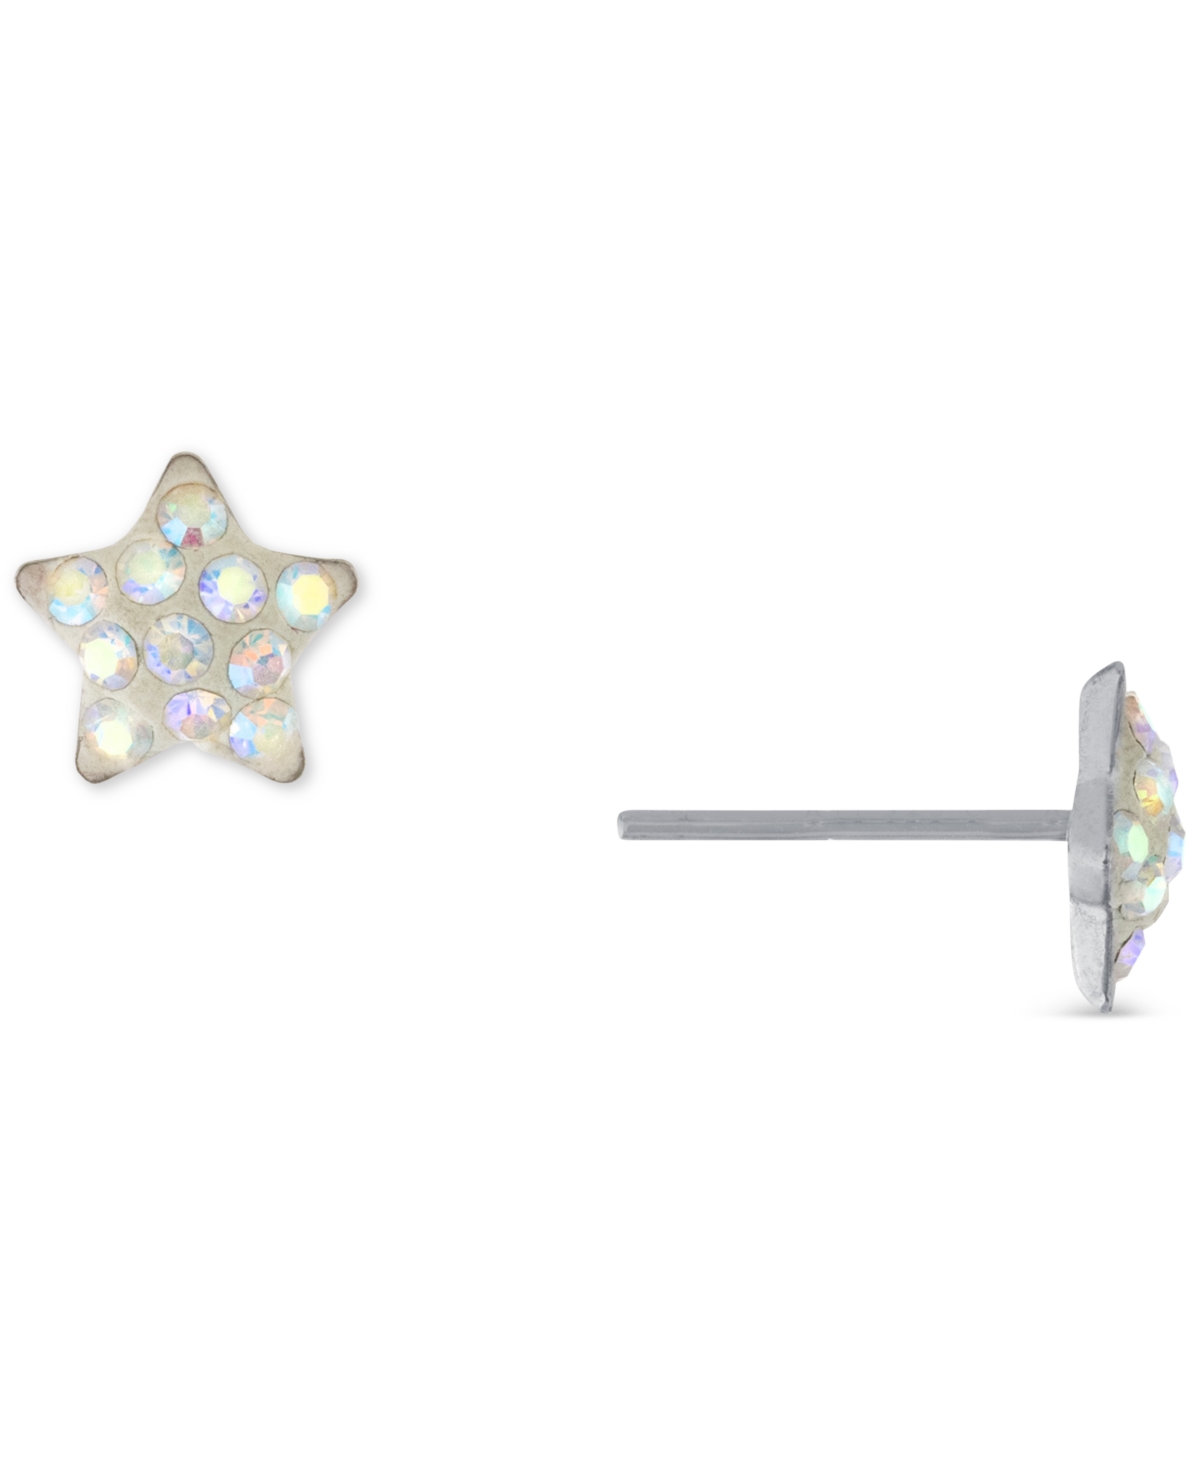 Giani Bernini Crystal Star Stud Earrings in Sterling Silver, Created for Macy's